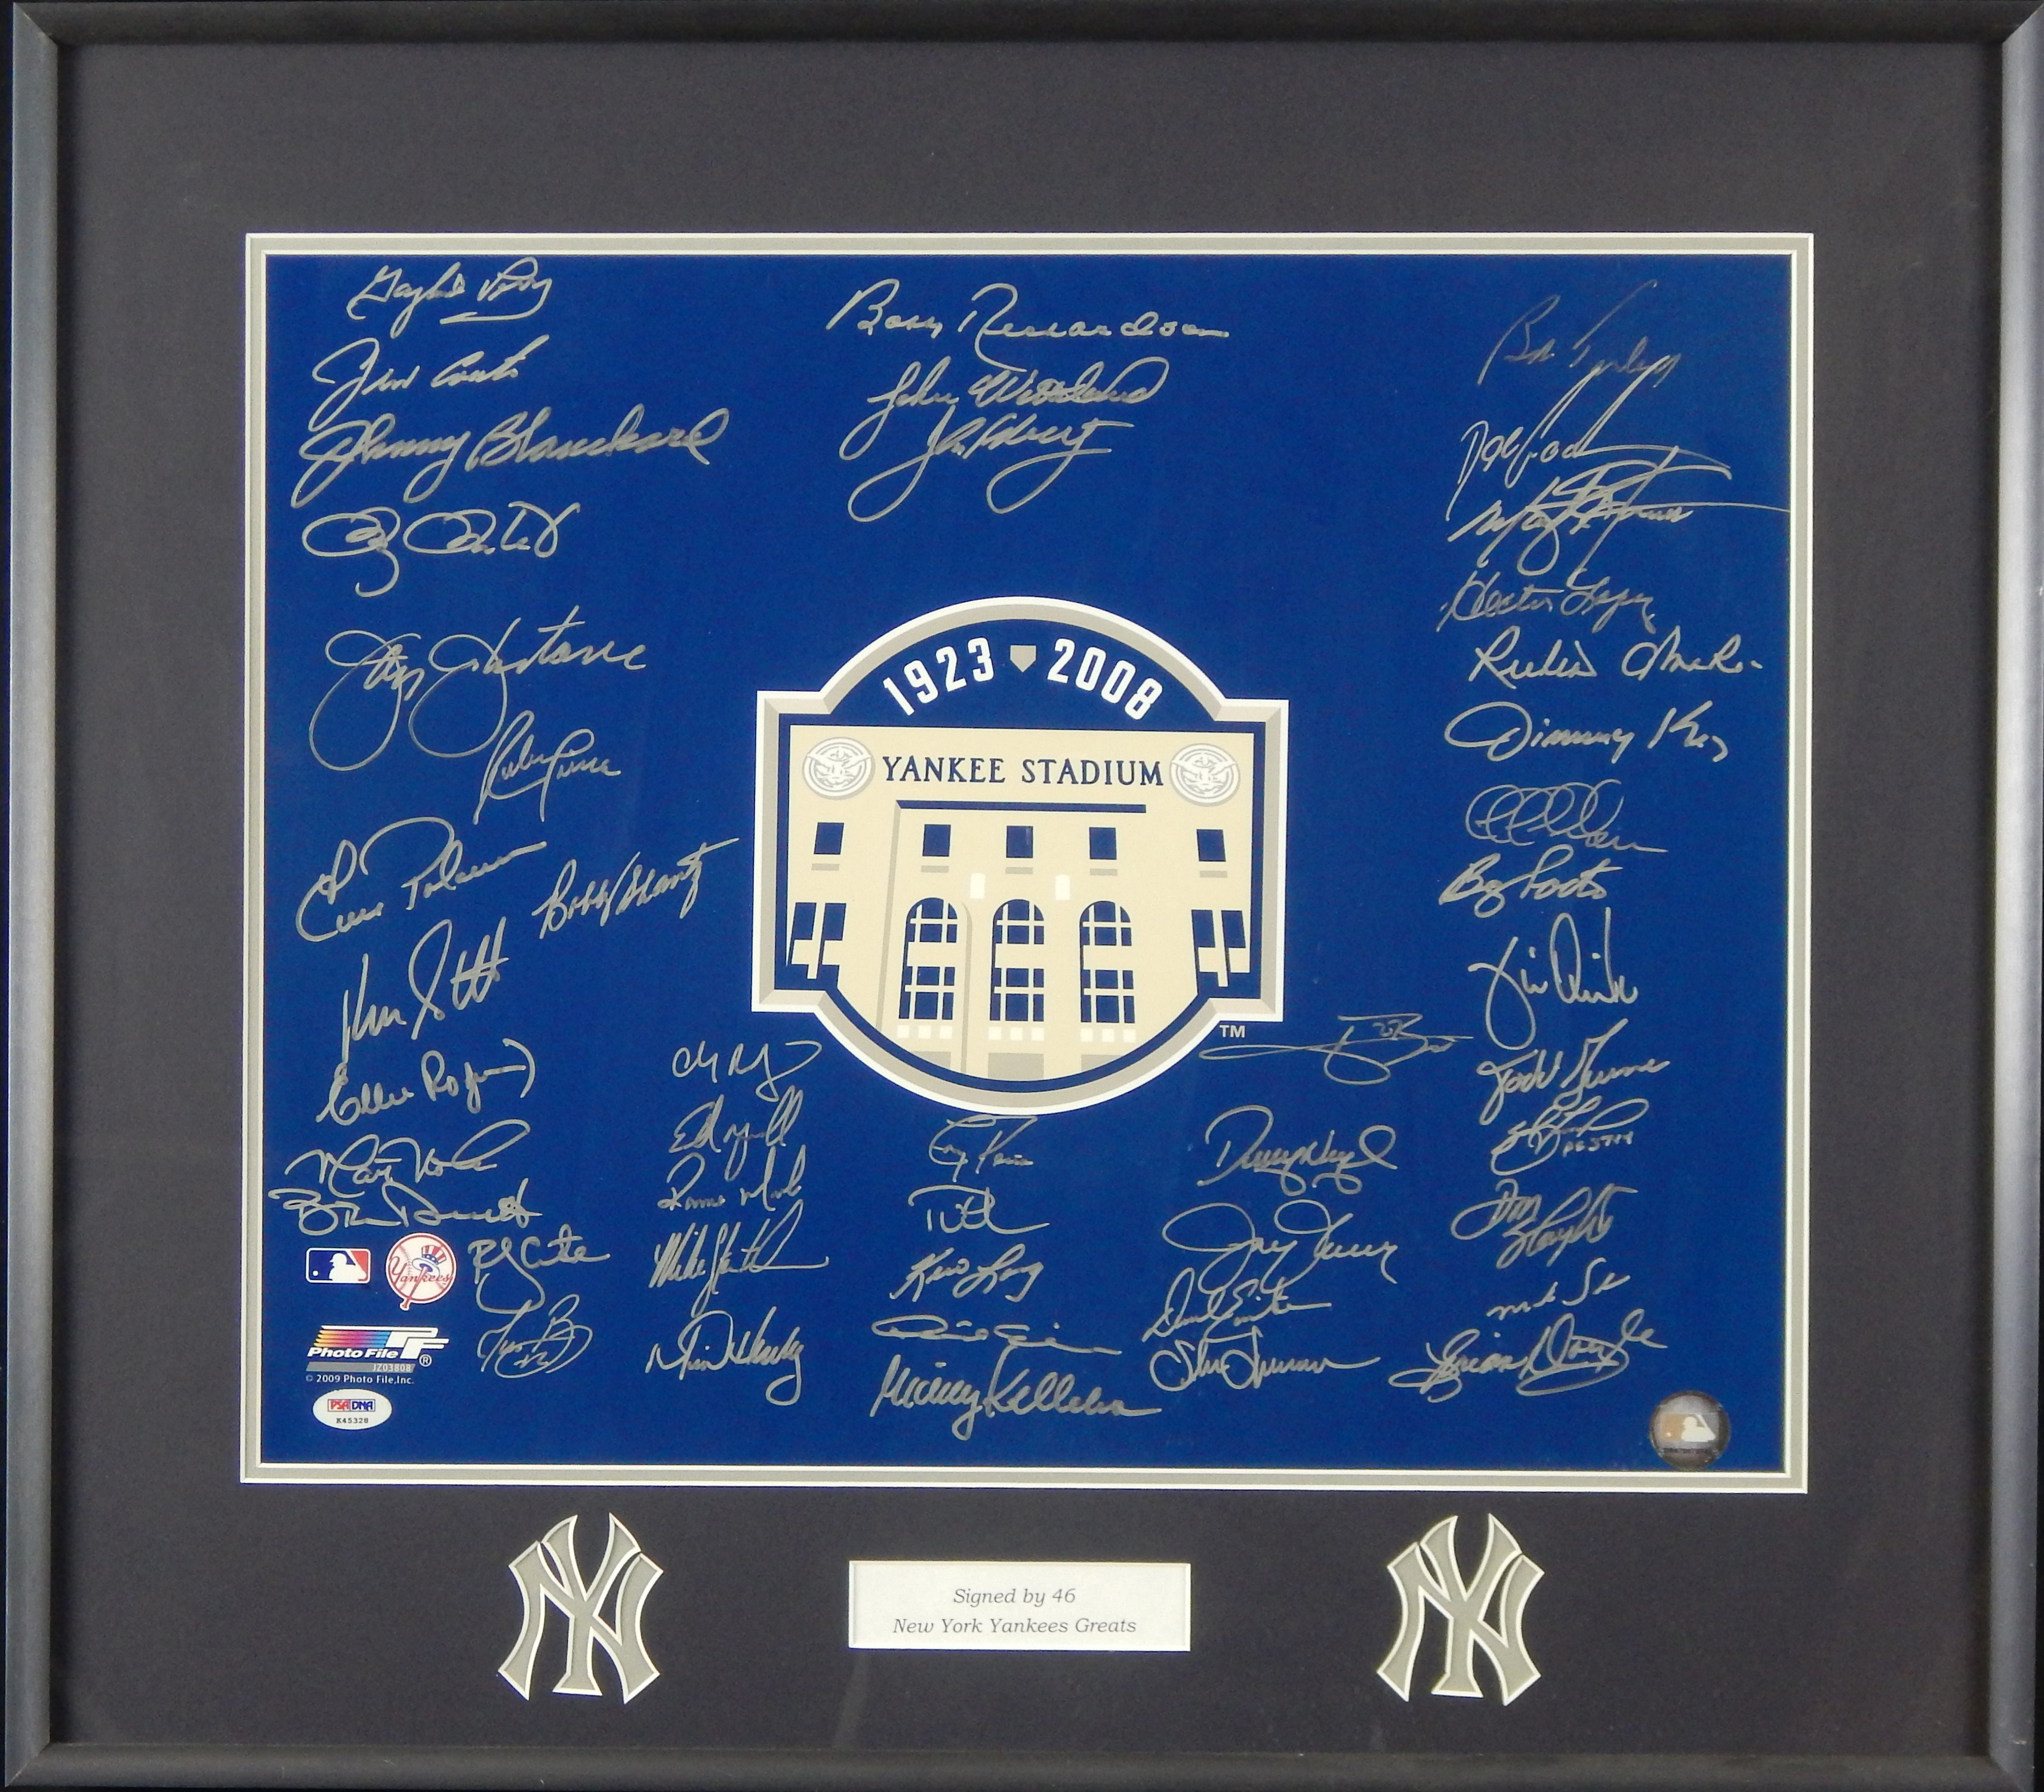 Baseball Autographs - 2008 New York Yankees Greats Signed Photo (PSA/DNA)